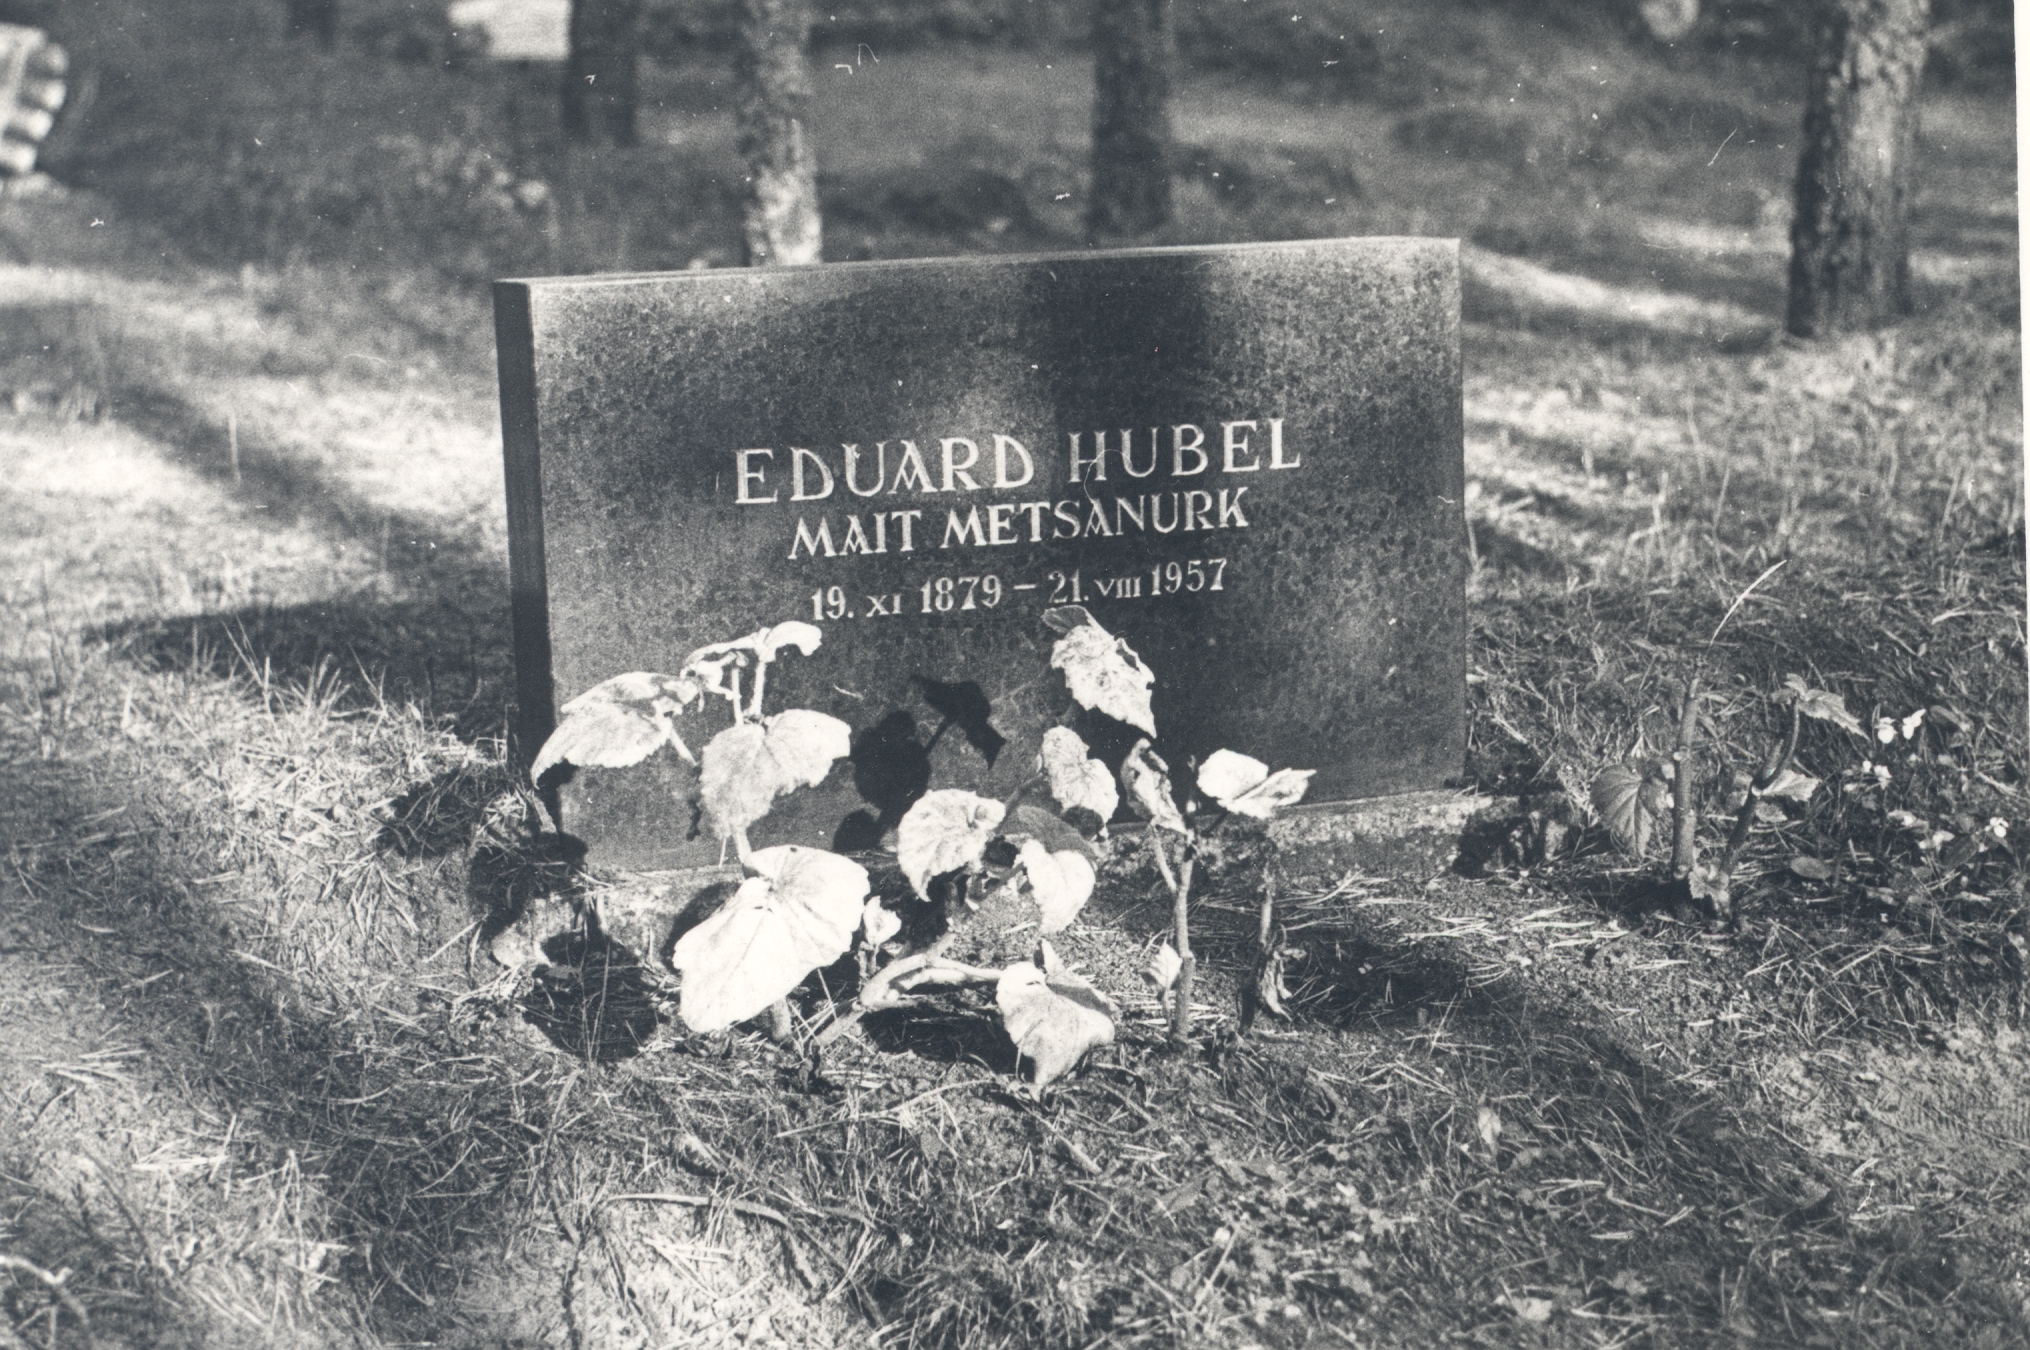 The tomb of Eduard Hubel (1879-1957) in Tallinn at the Metsakalmimist. 1974. a.